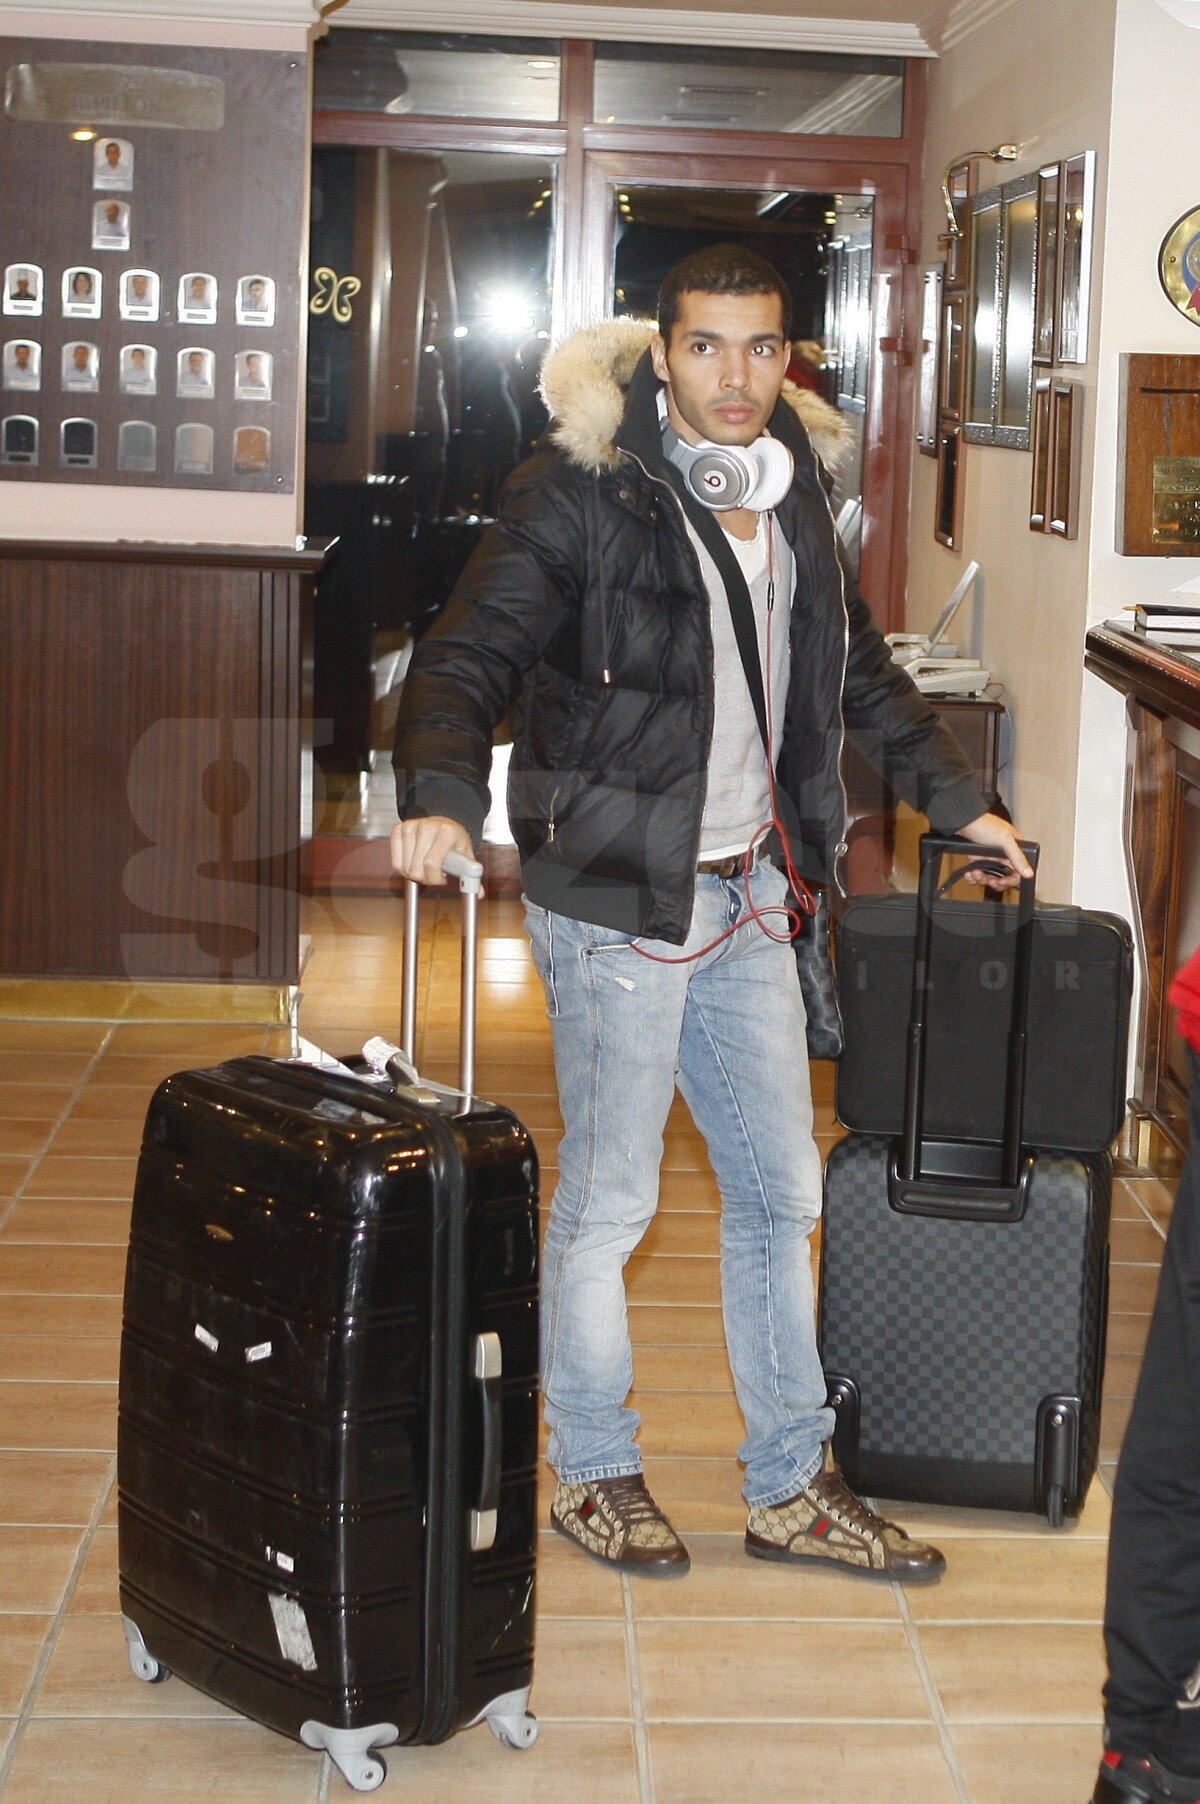 FOTO EXCLUSIV » Nasser a semnat cu Dinamo, azi face primul antrenament în Antalya